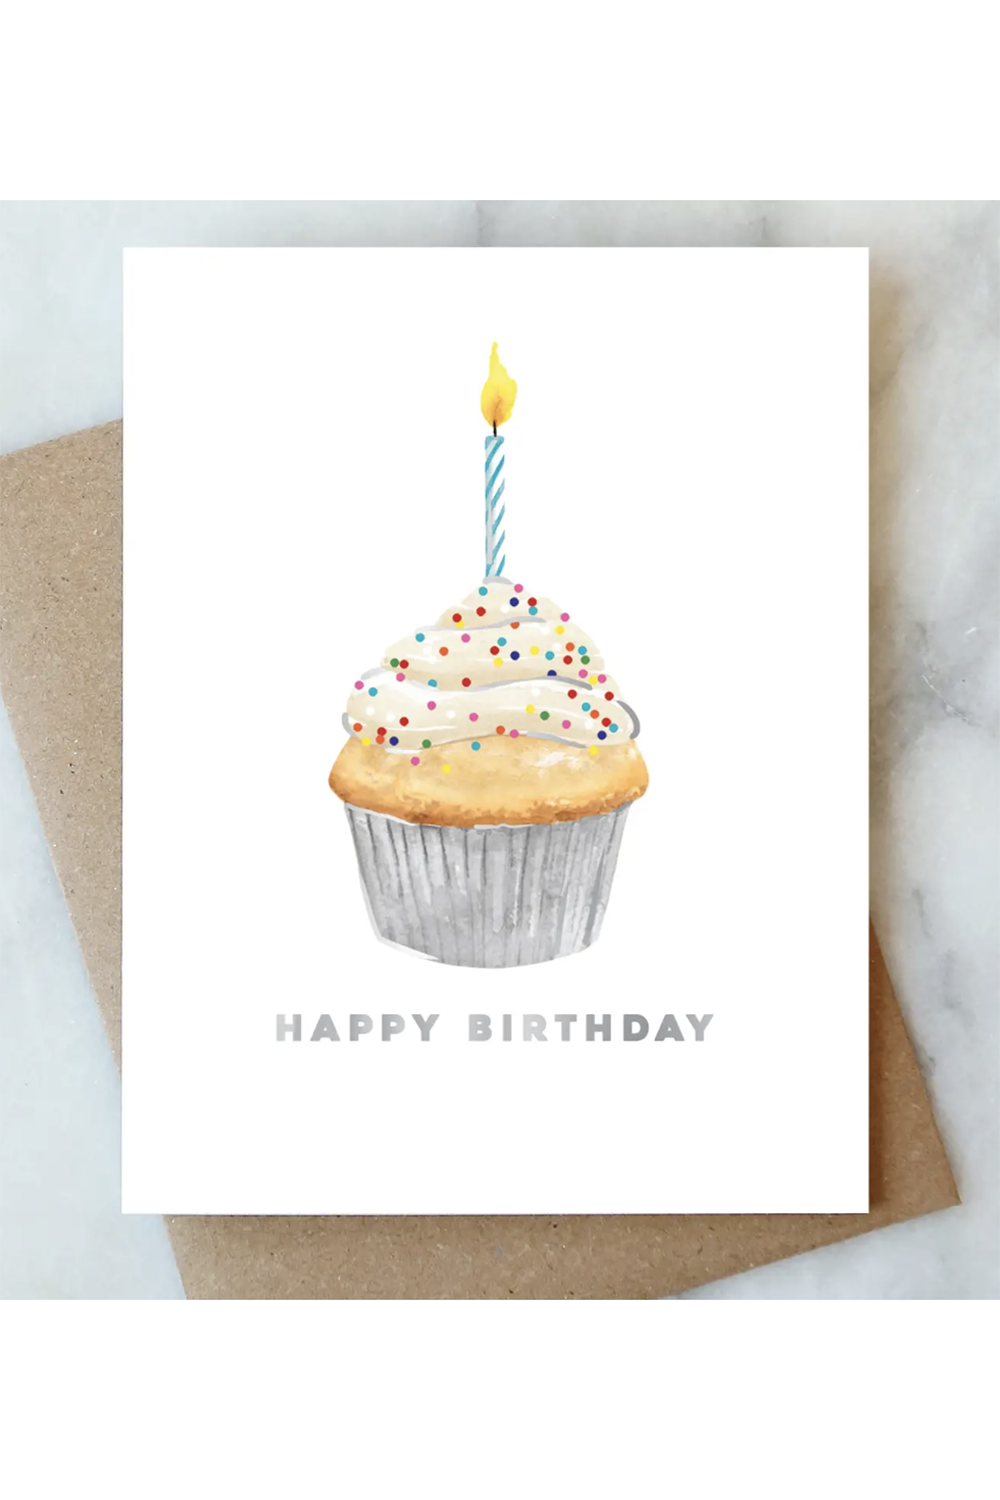 AJD Birthday Card - Cupcake